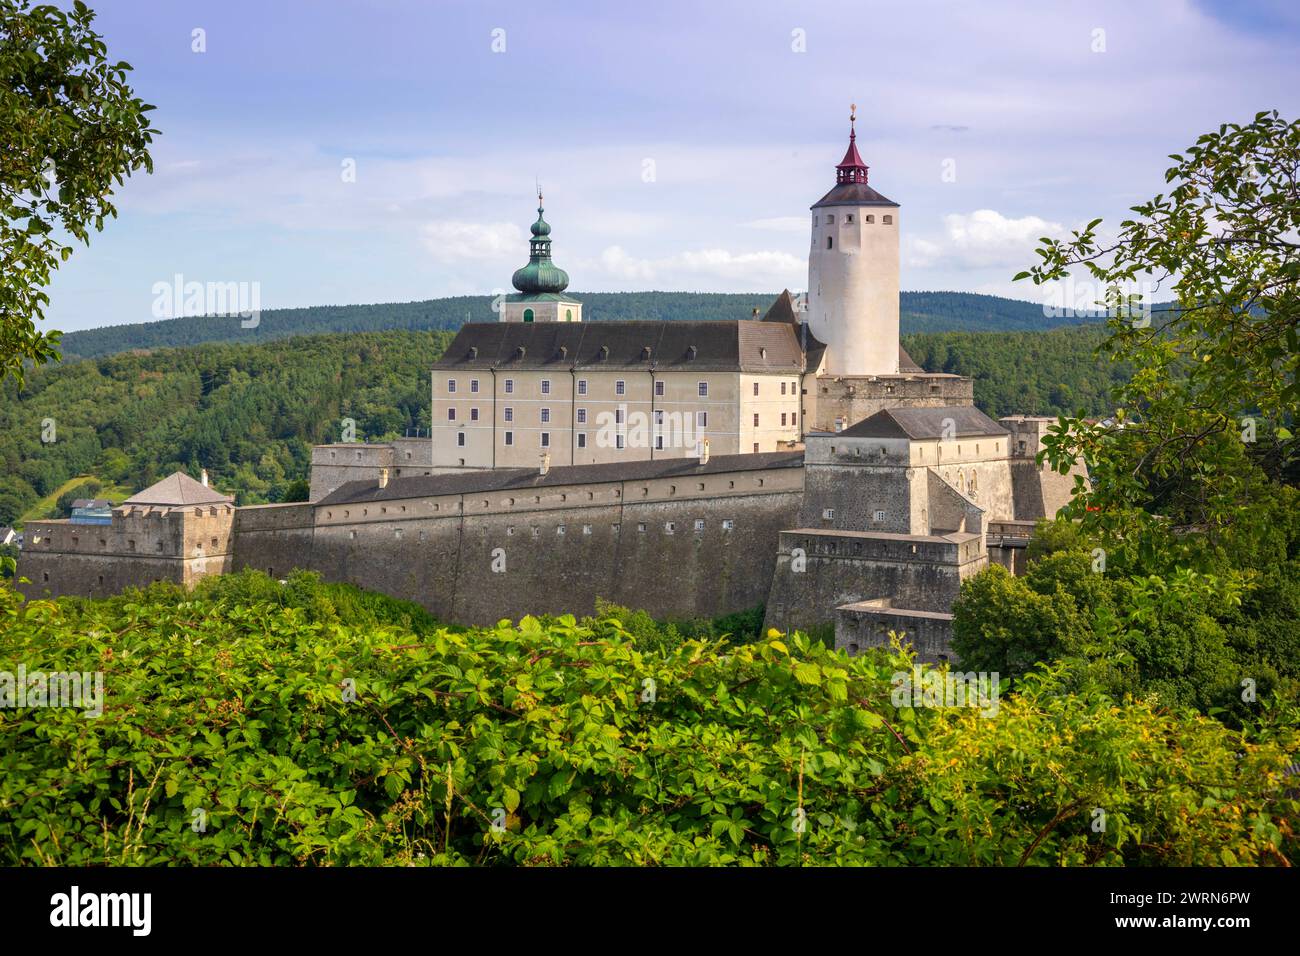 Forchtenstein Castle, Burgenland, Austria, Europe Copyright: JohnxGuidi 1237-646 Stock Photo